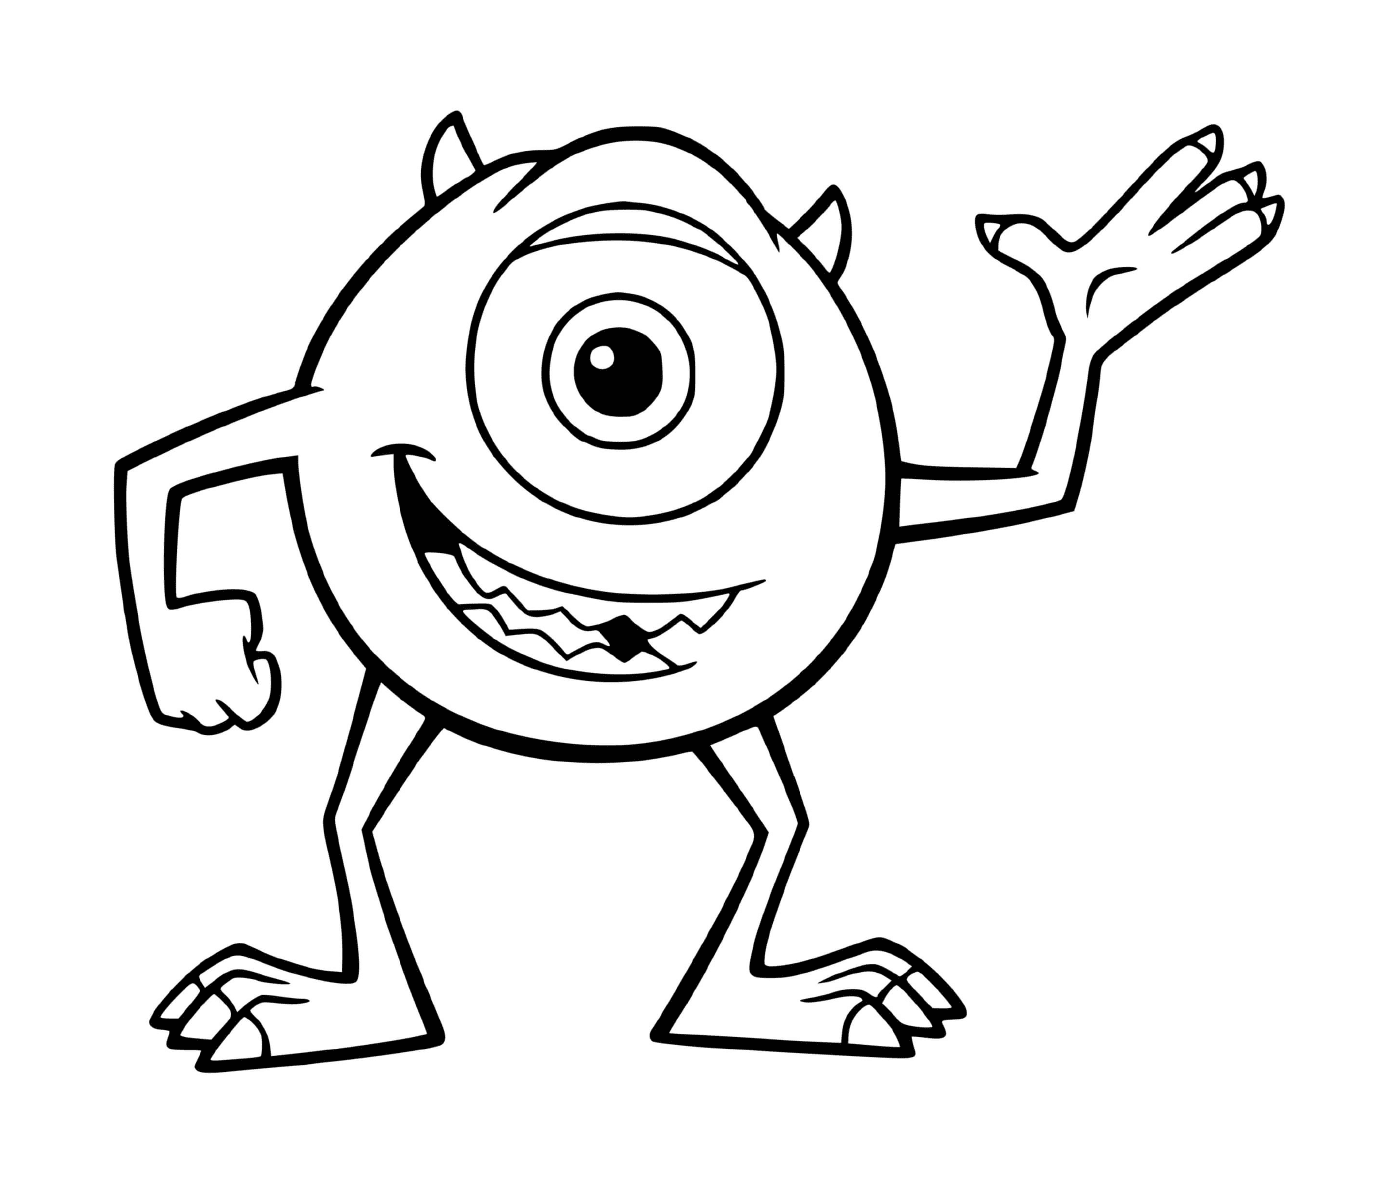  Animated monster who salutes 